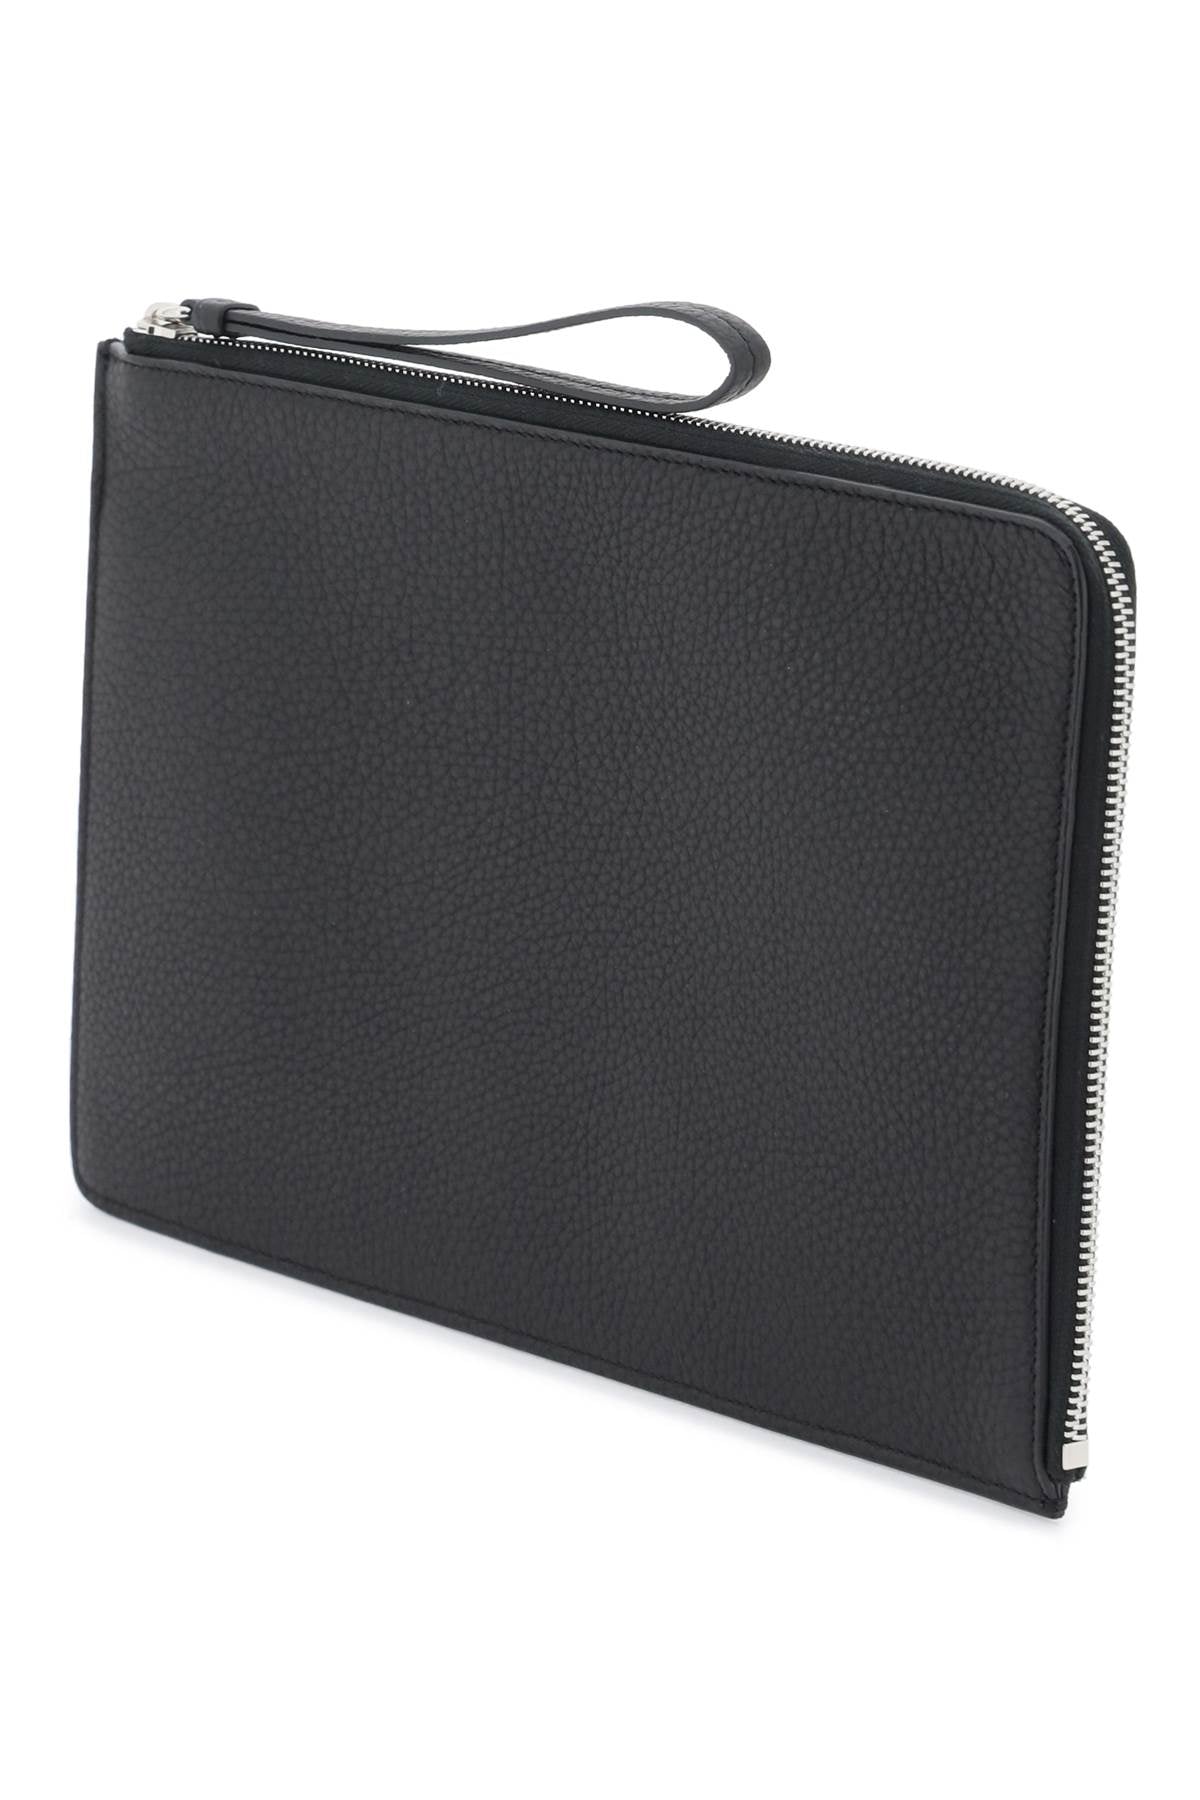 MAISON MARGIELA Stylish Black Leather Pouch Handbag for Women